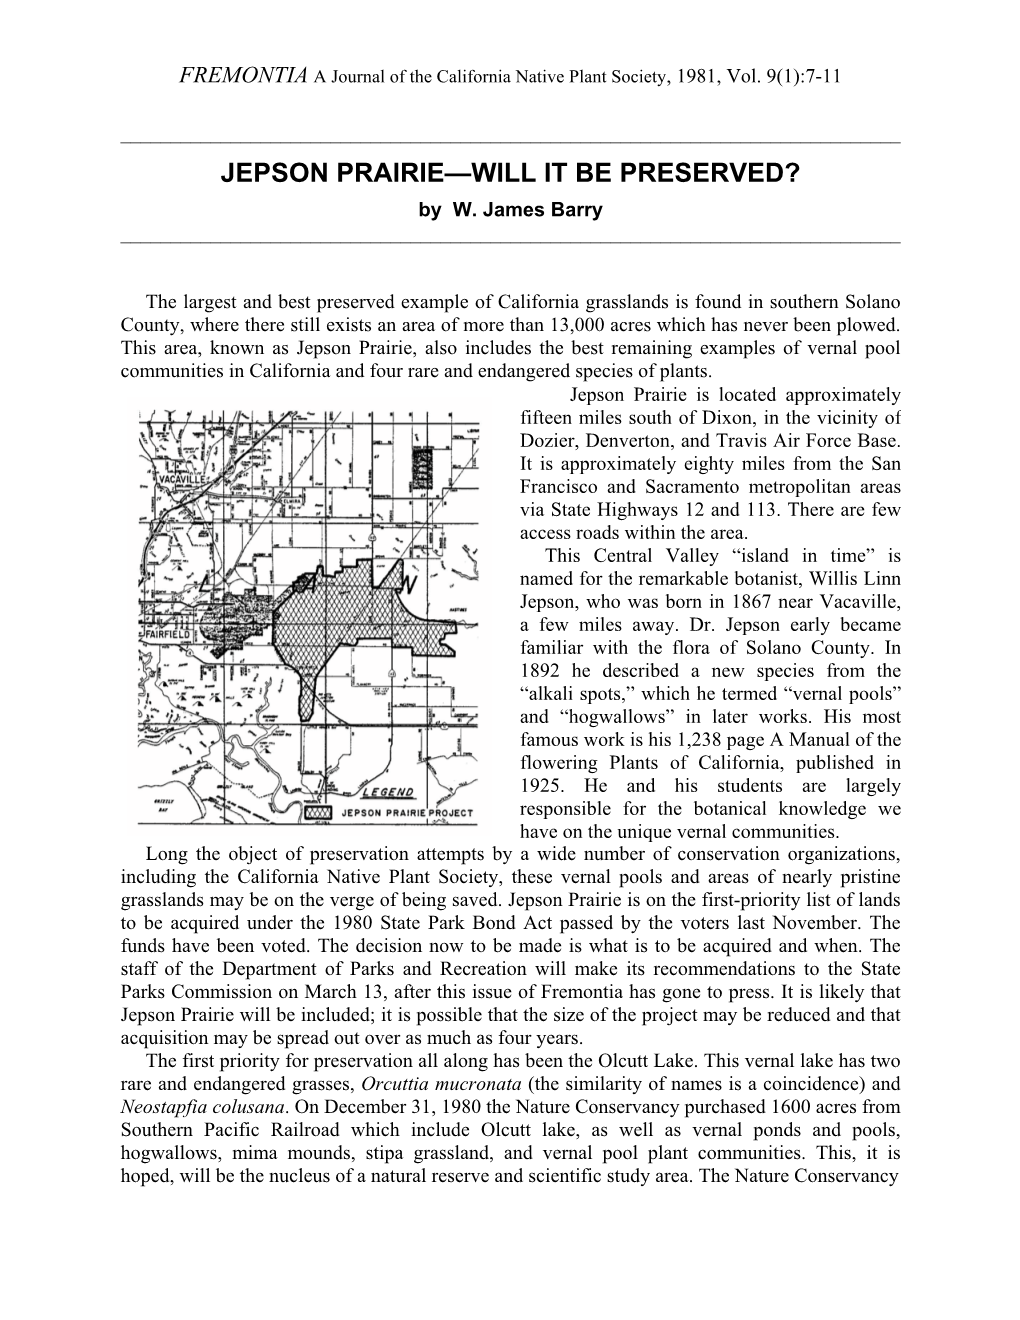 JEPSON PRAIRIE—WILL IT BE PRESERVED? by W